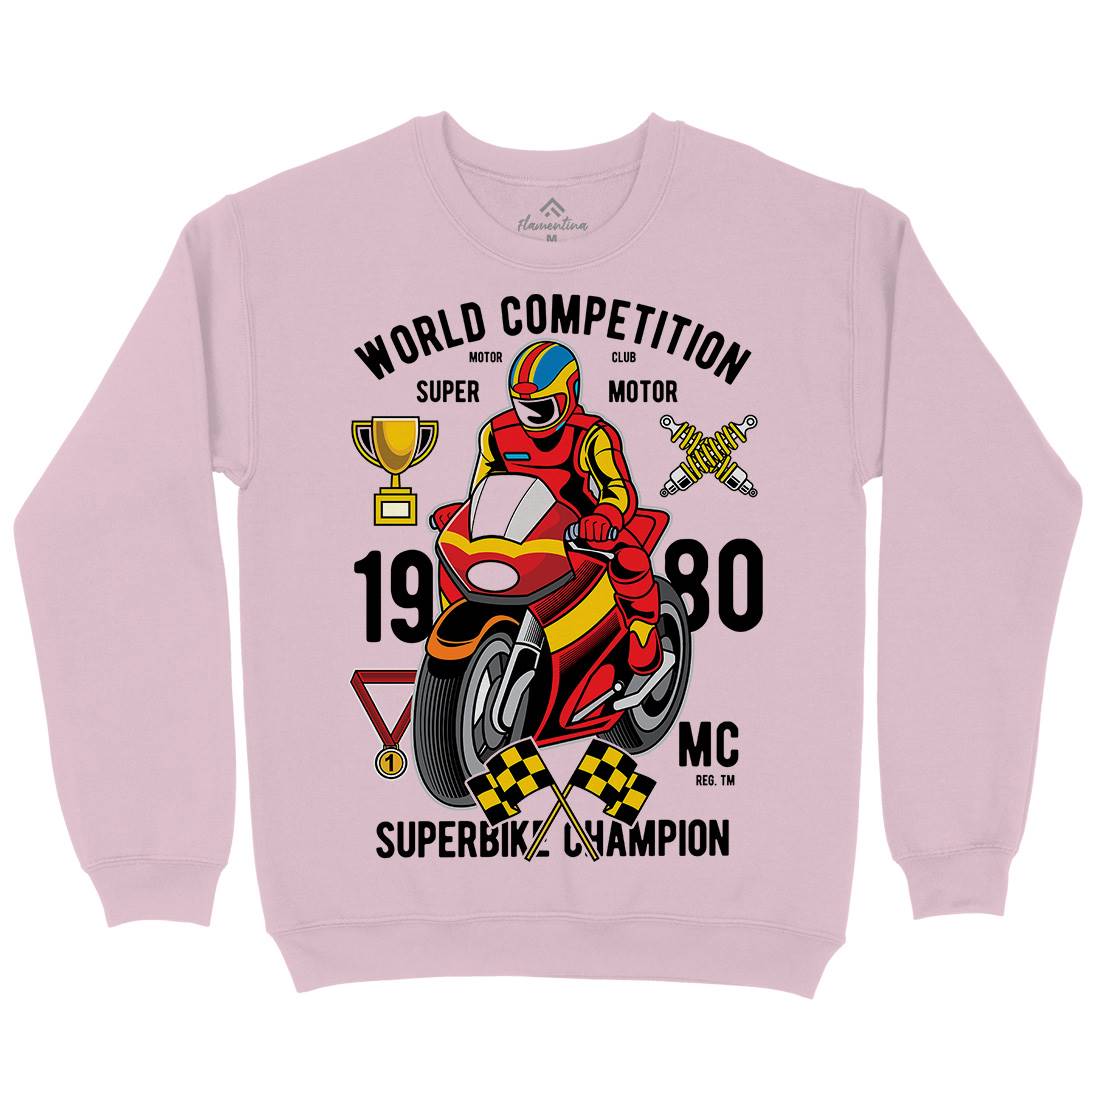 Super Bike World Competition Kids Crew Neck Sweatshirt Motorcycles C458